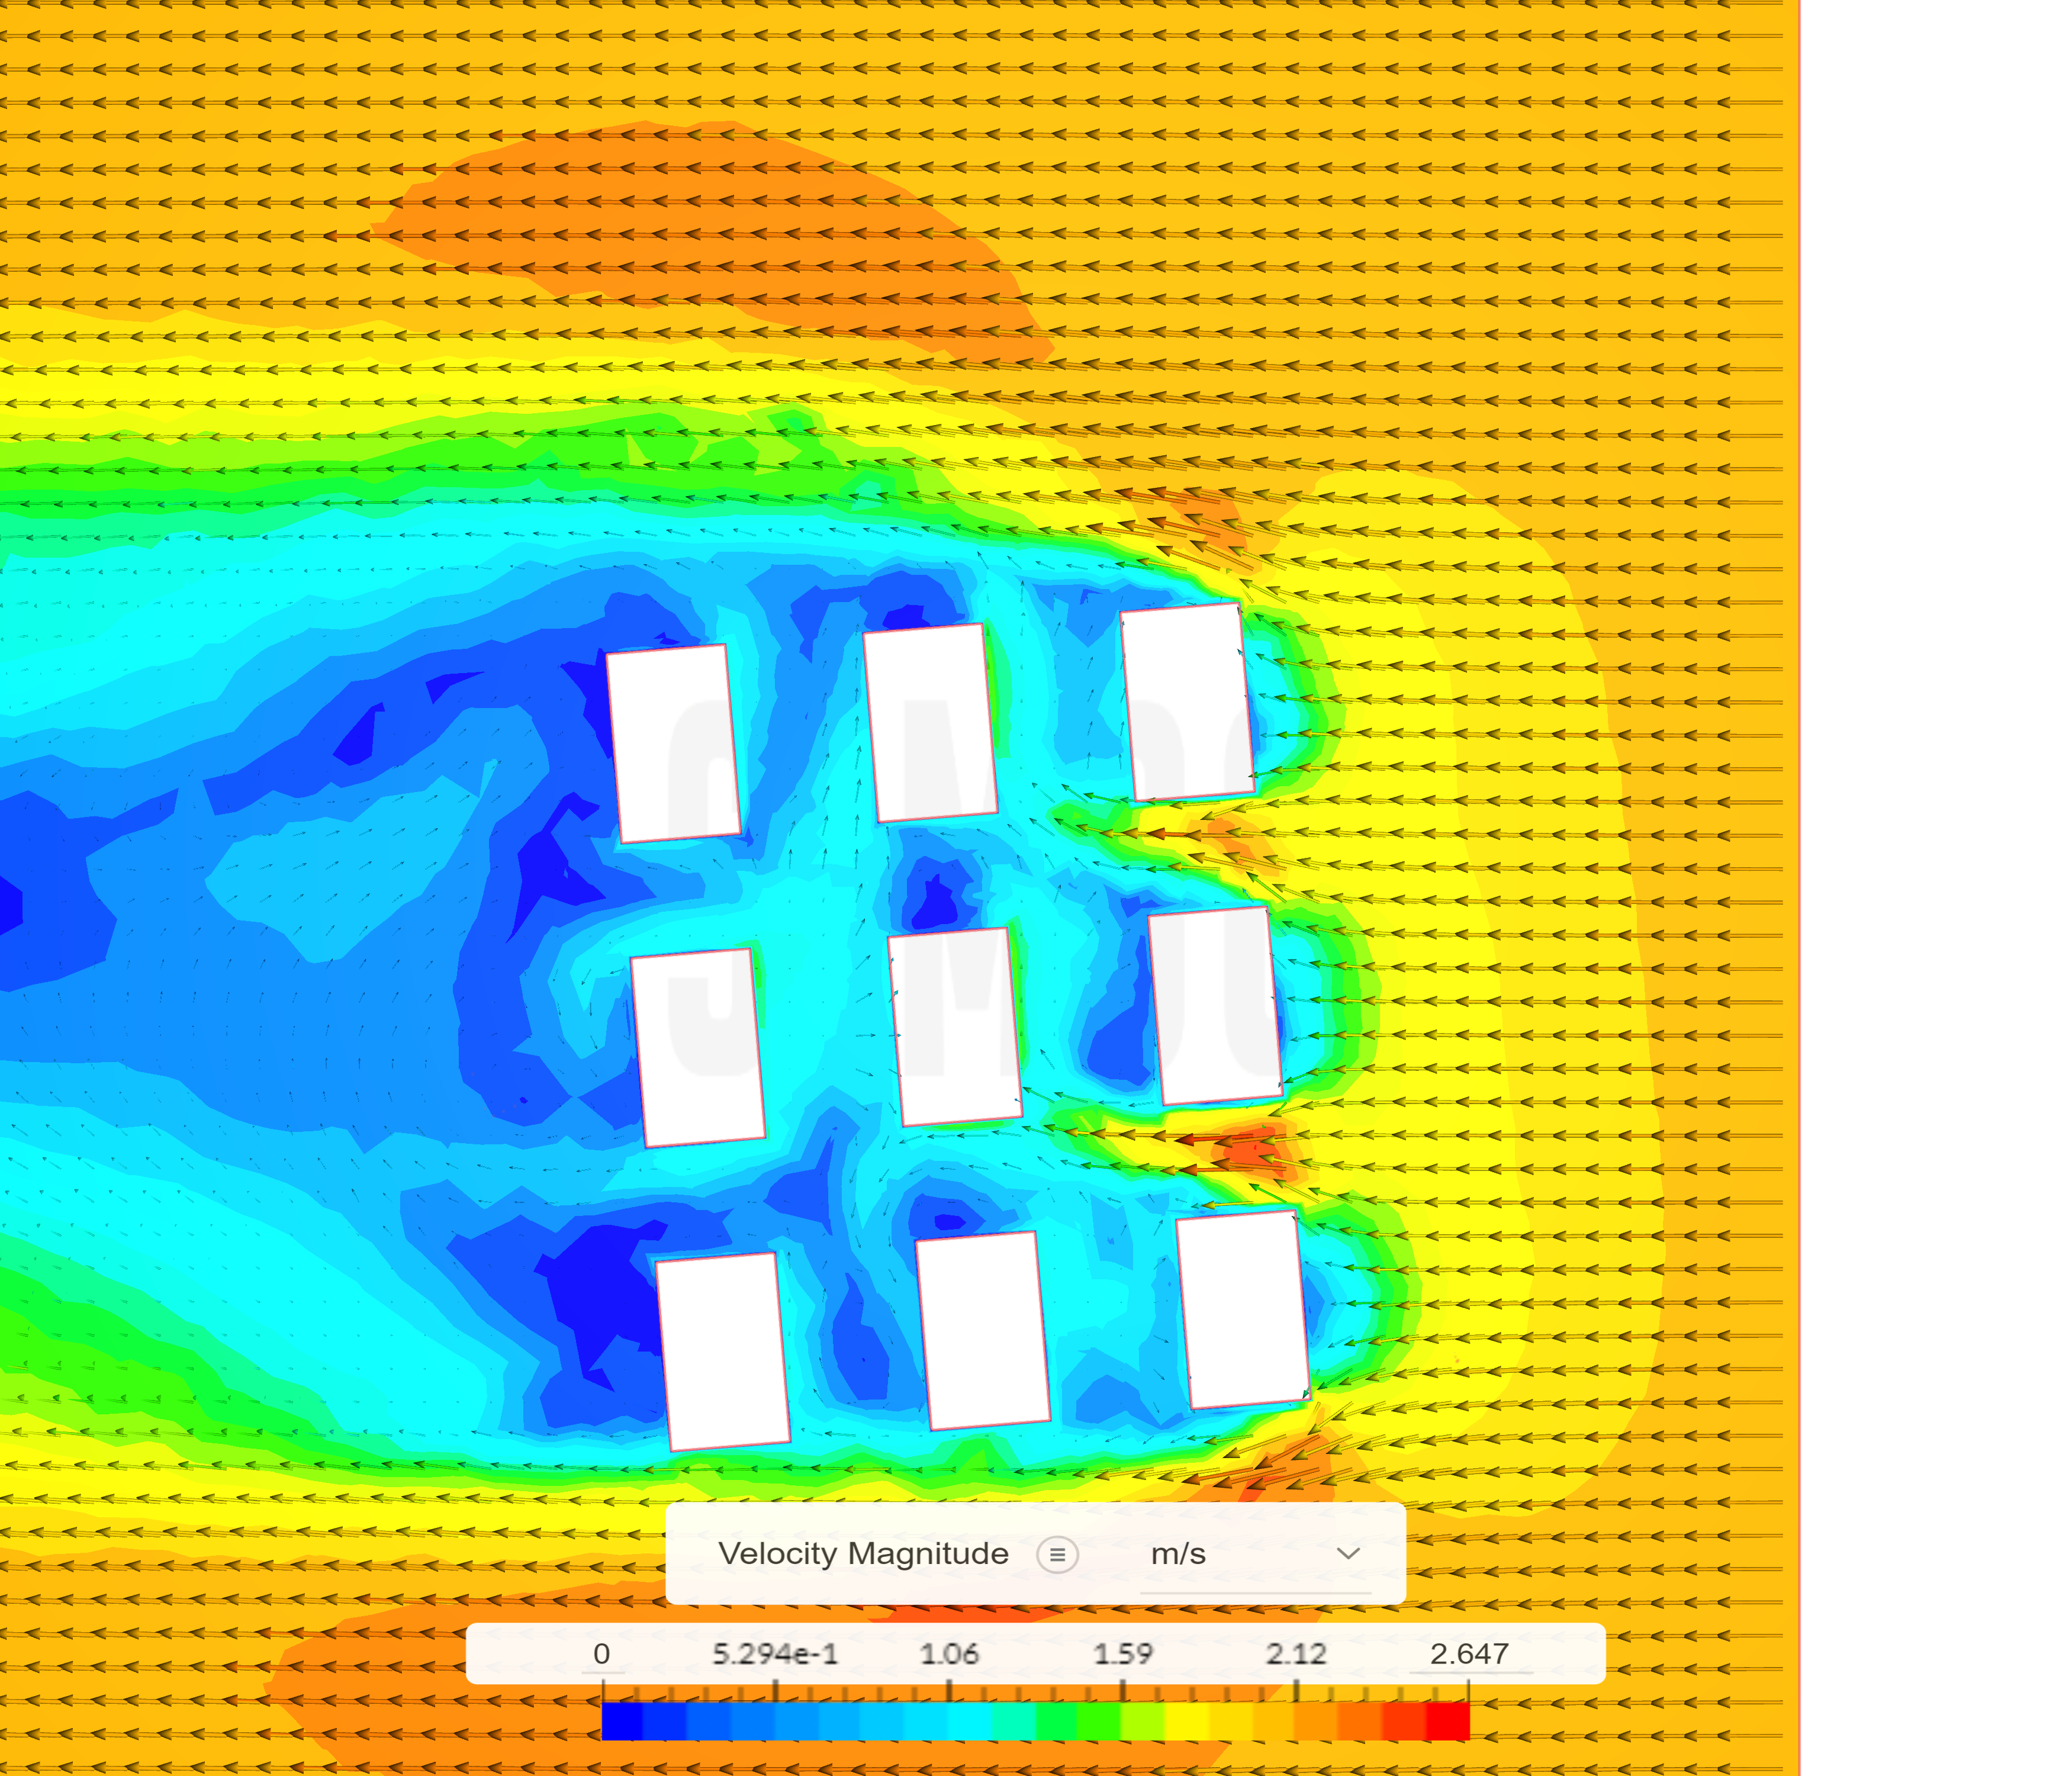 Wind_simulation image